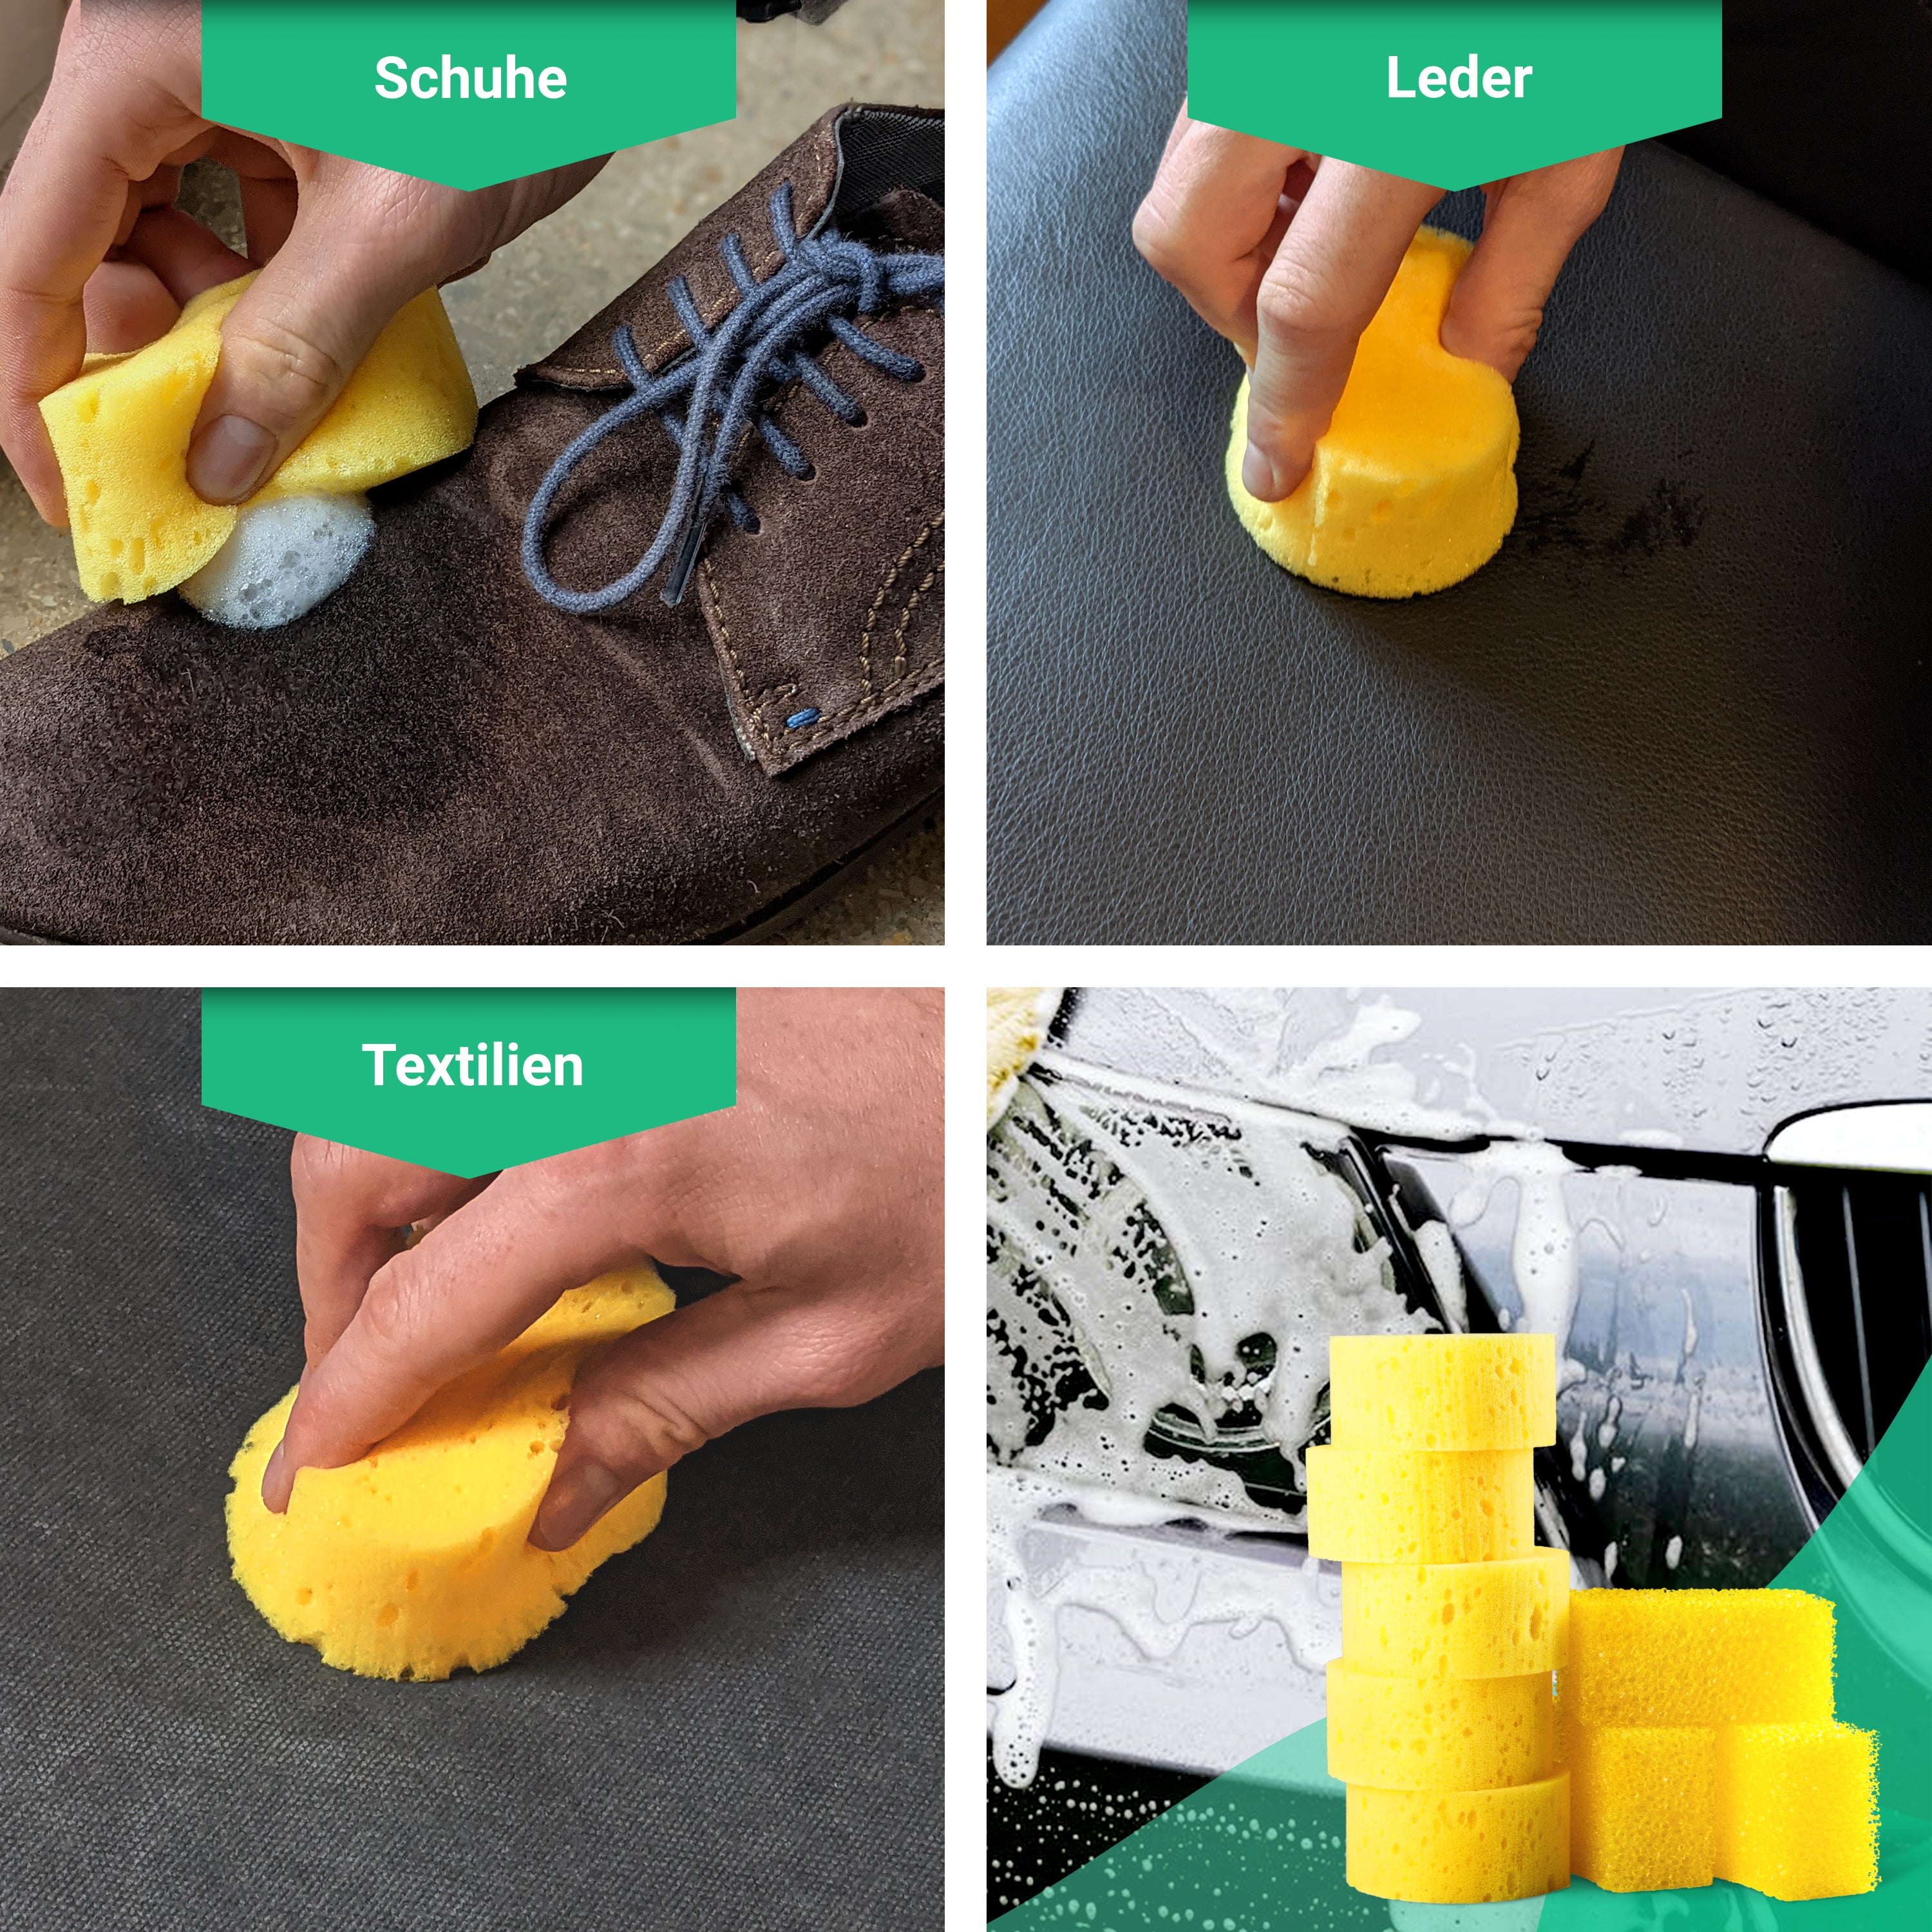 Foam polishing sponges for wood &amp; leather care, coarse &amp; fine sponges washable 